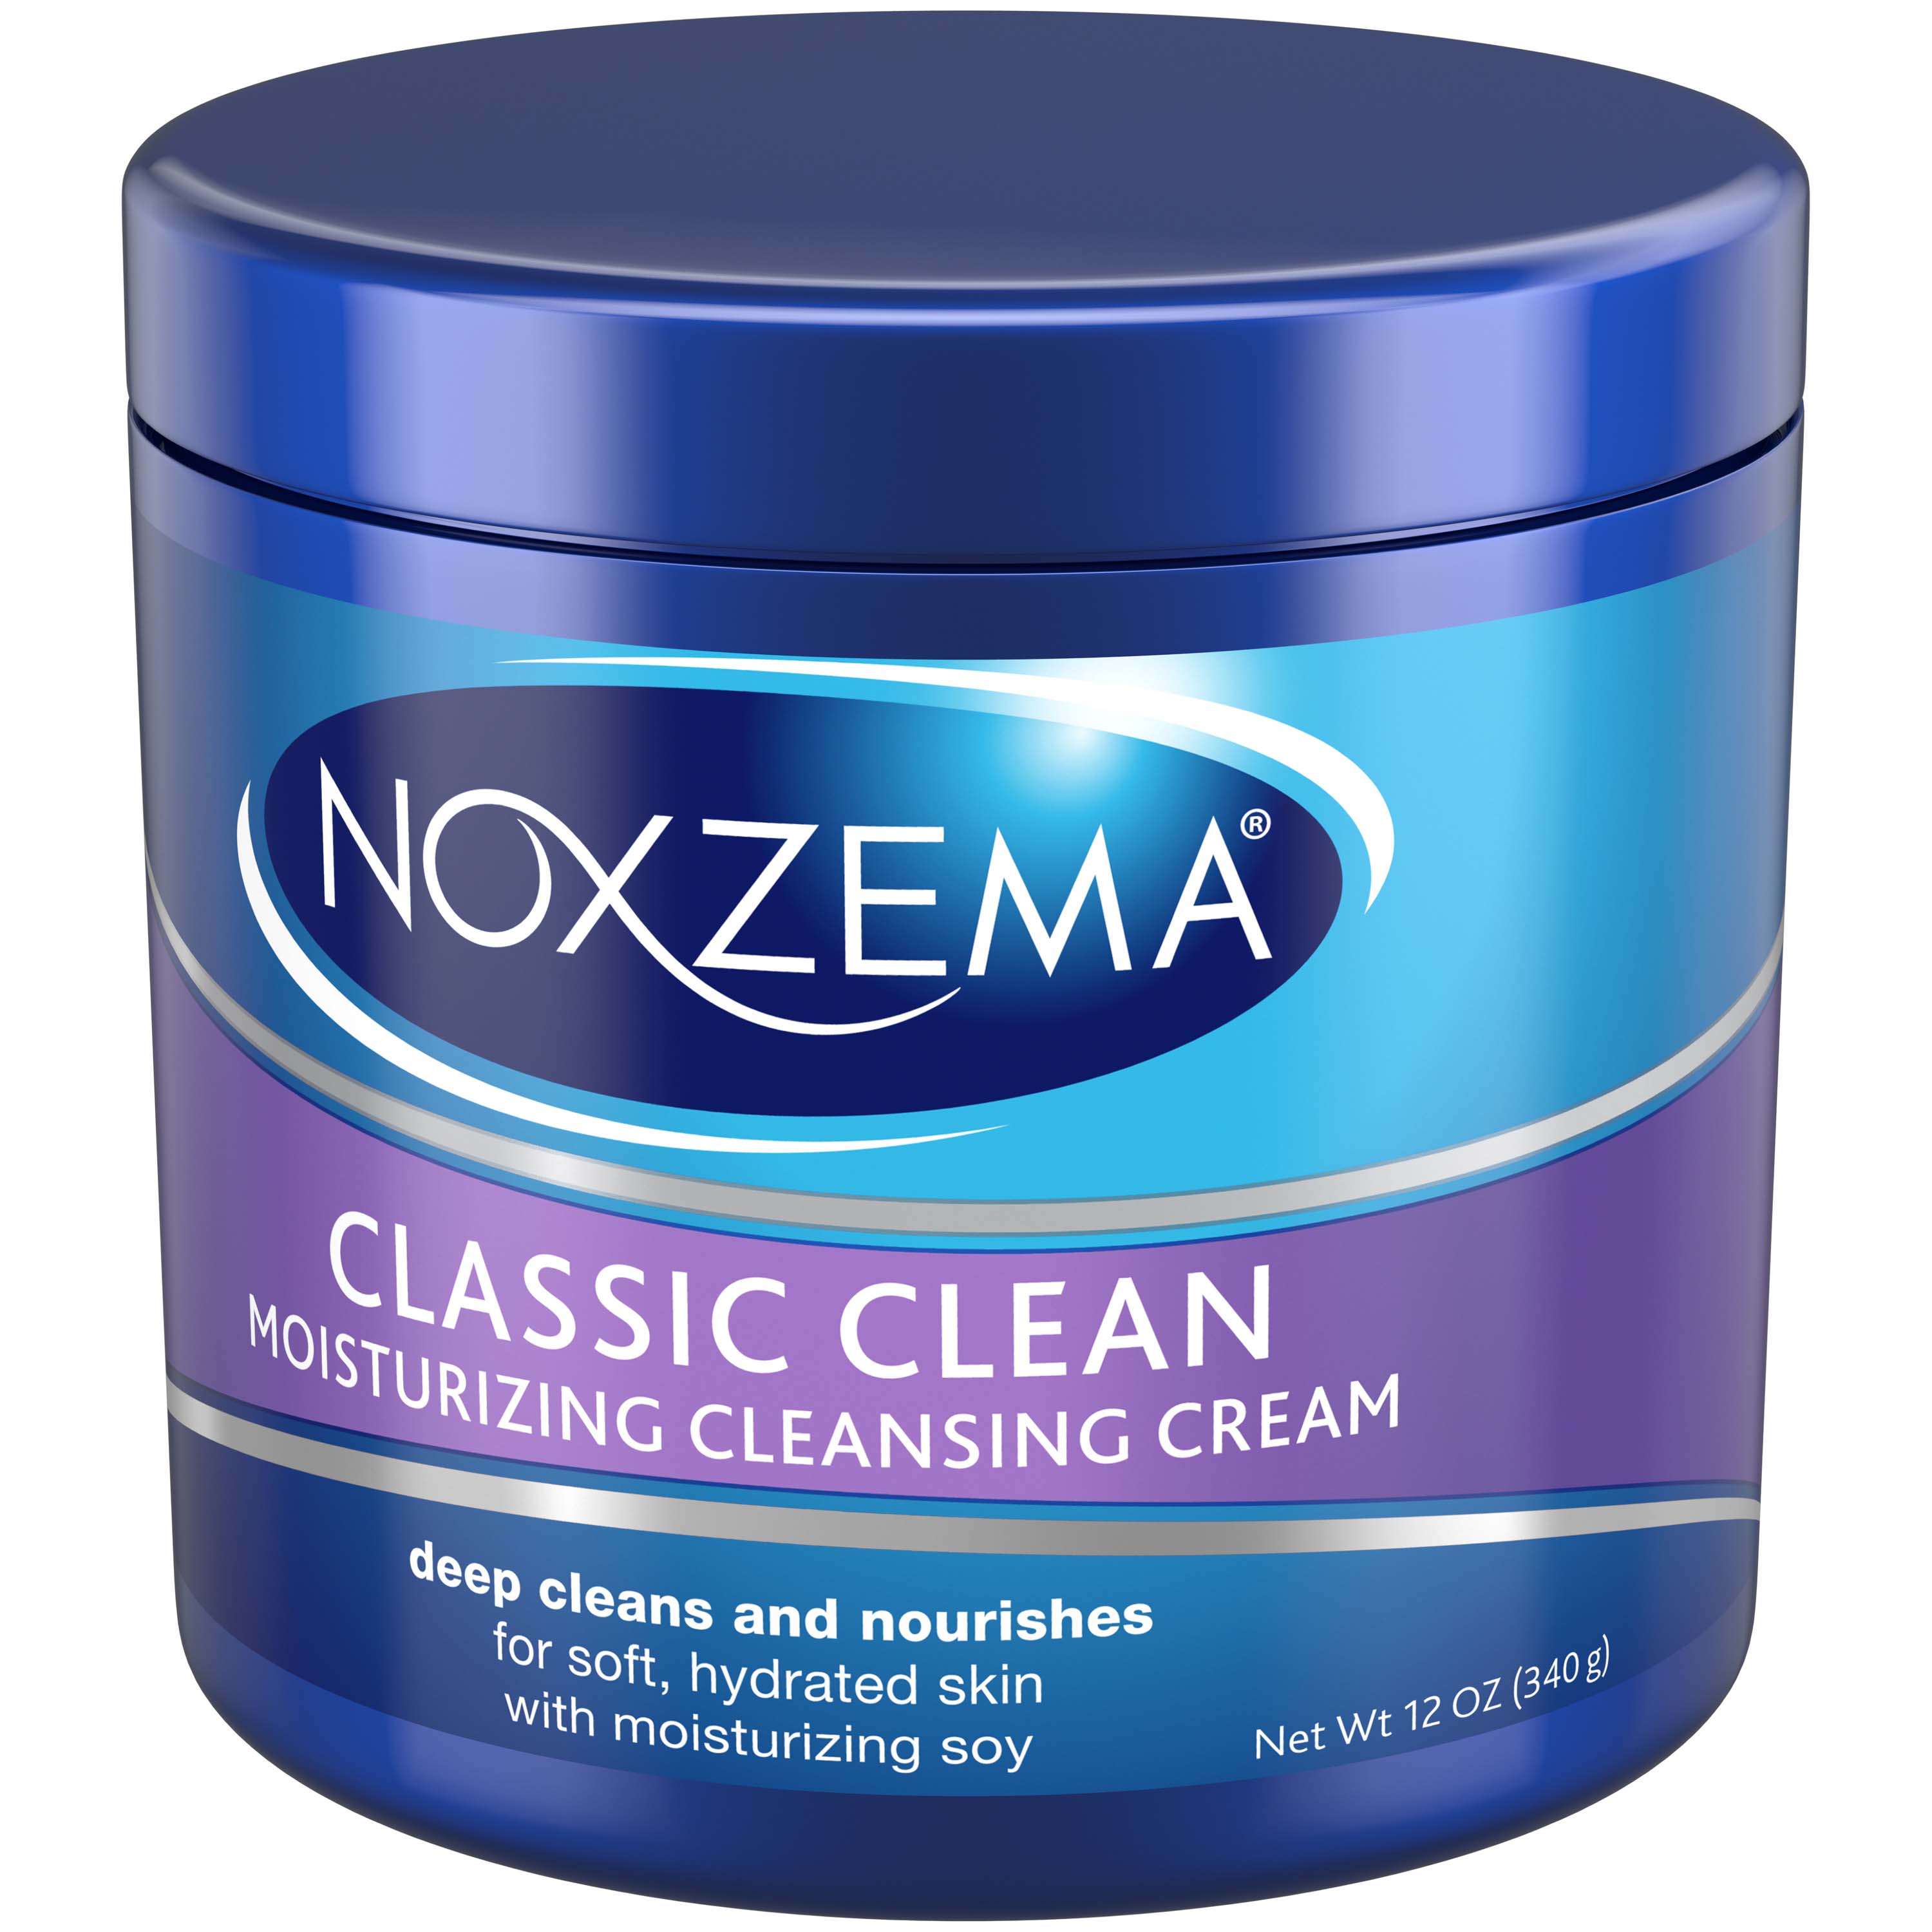 Noxzema Classic Clean, Moisturizing Cleansing Cream 12 oz - image 3 of 10